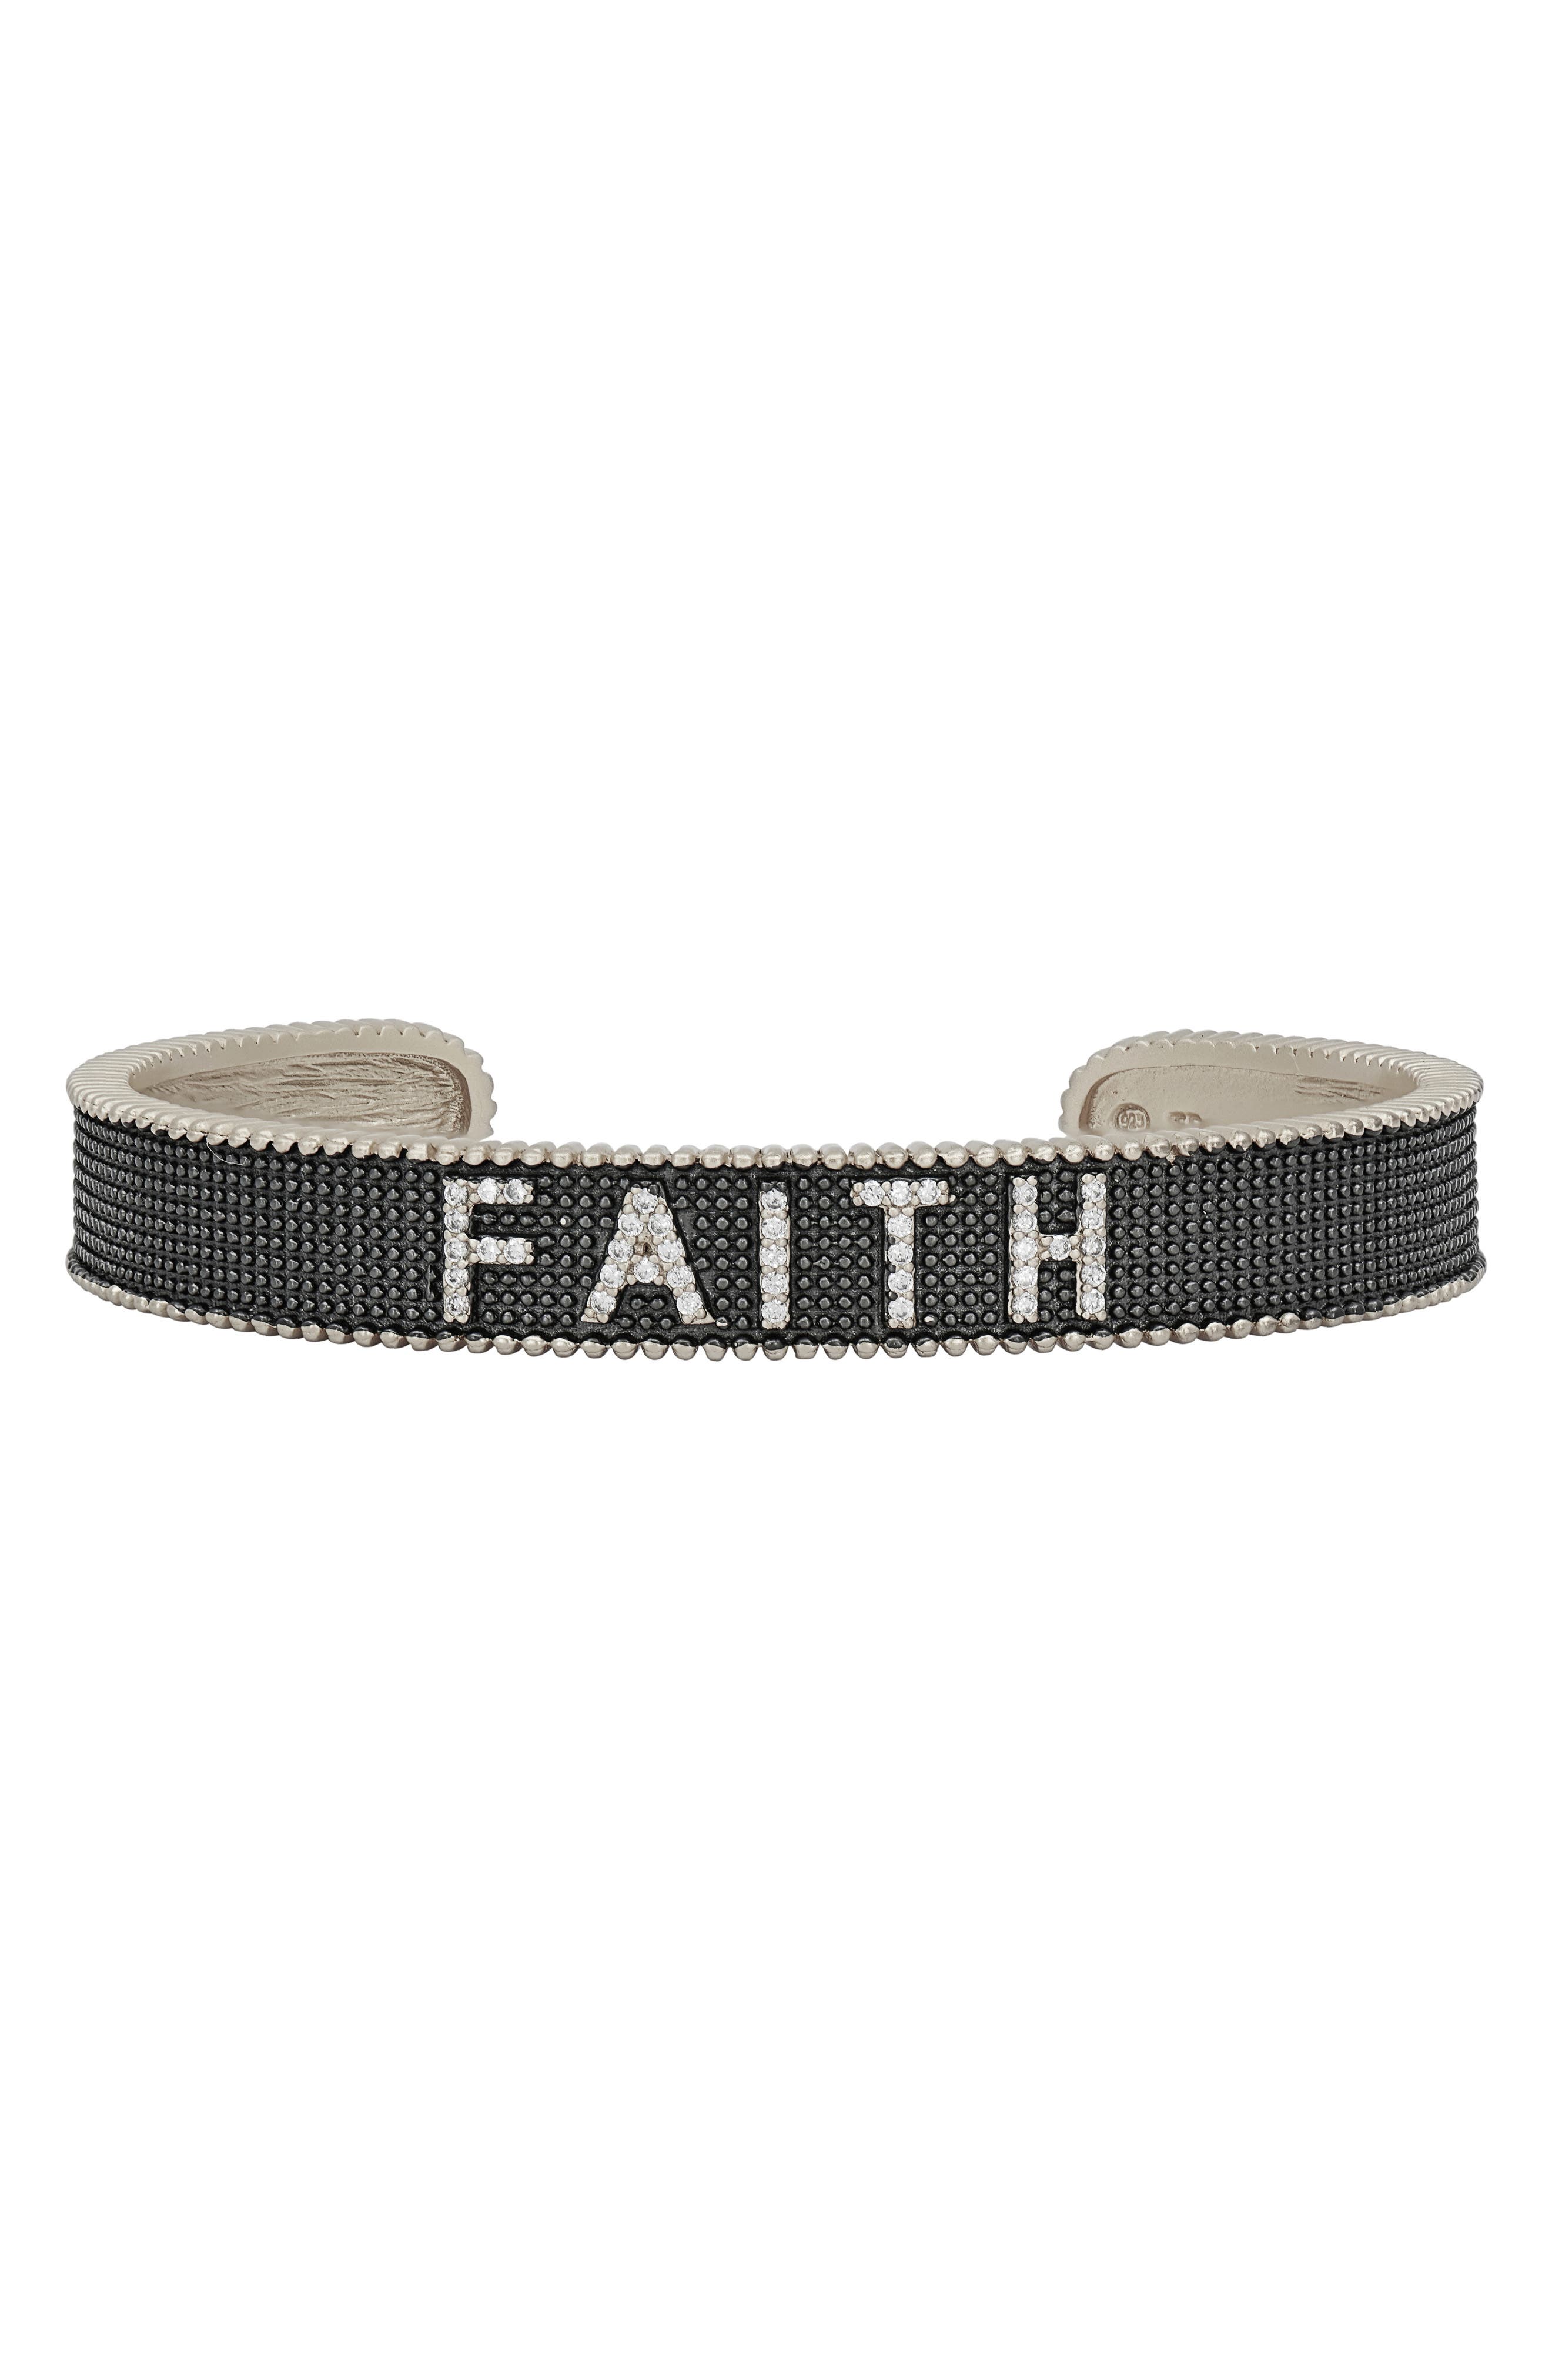 FREIDA ROTHMAN Faith Cuff Bracelet in Silver And Black at Nordstrom -  PRZB080219B